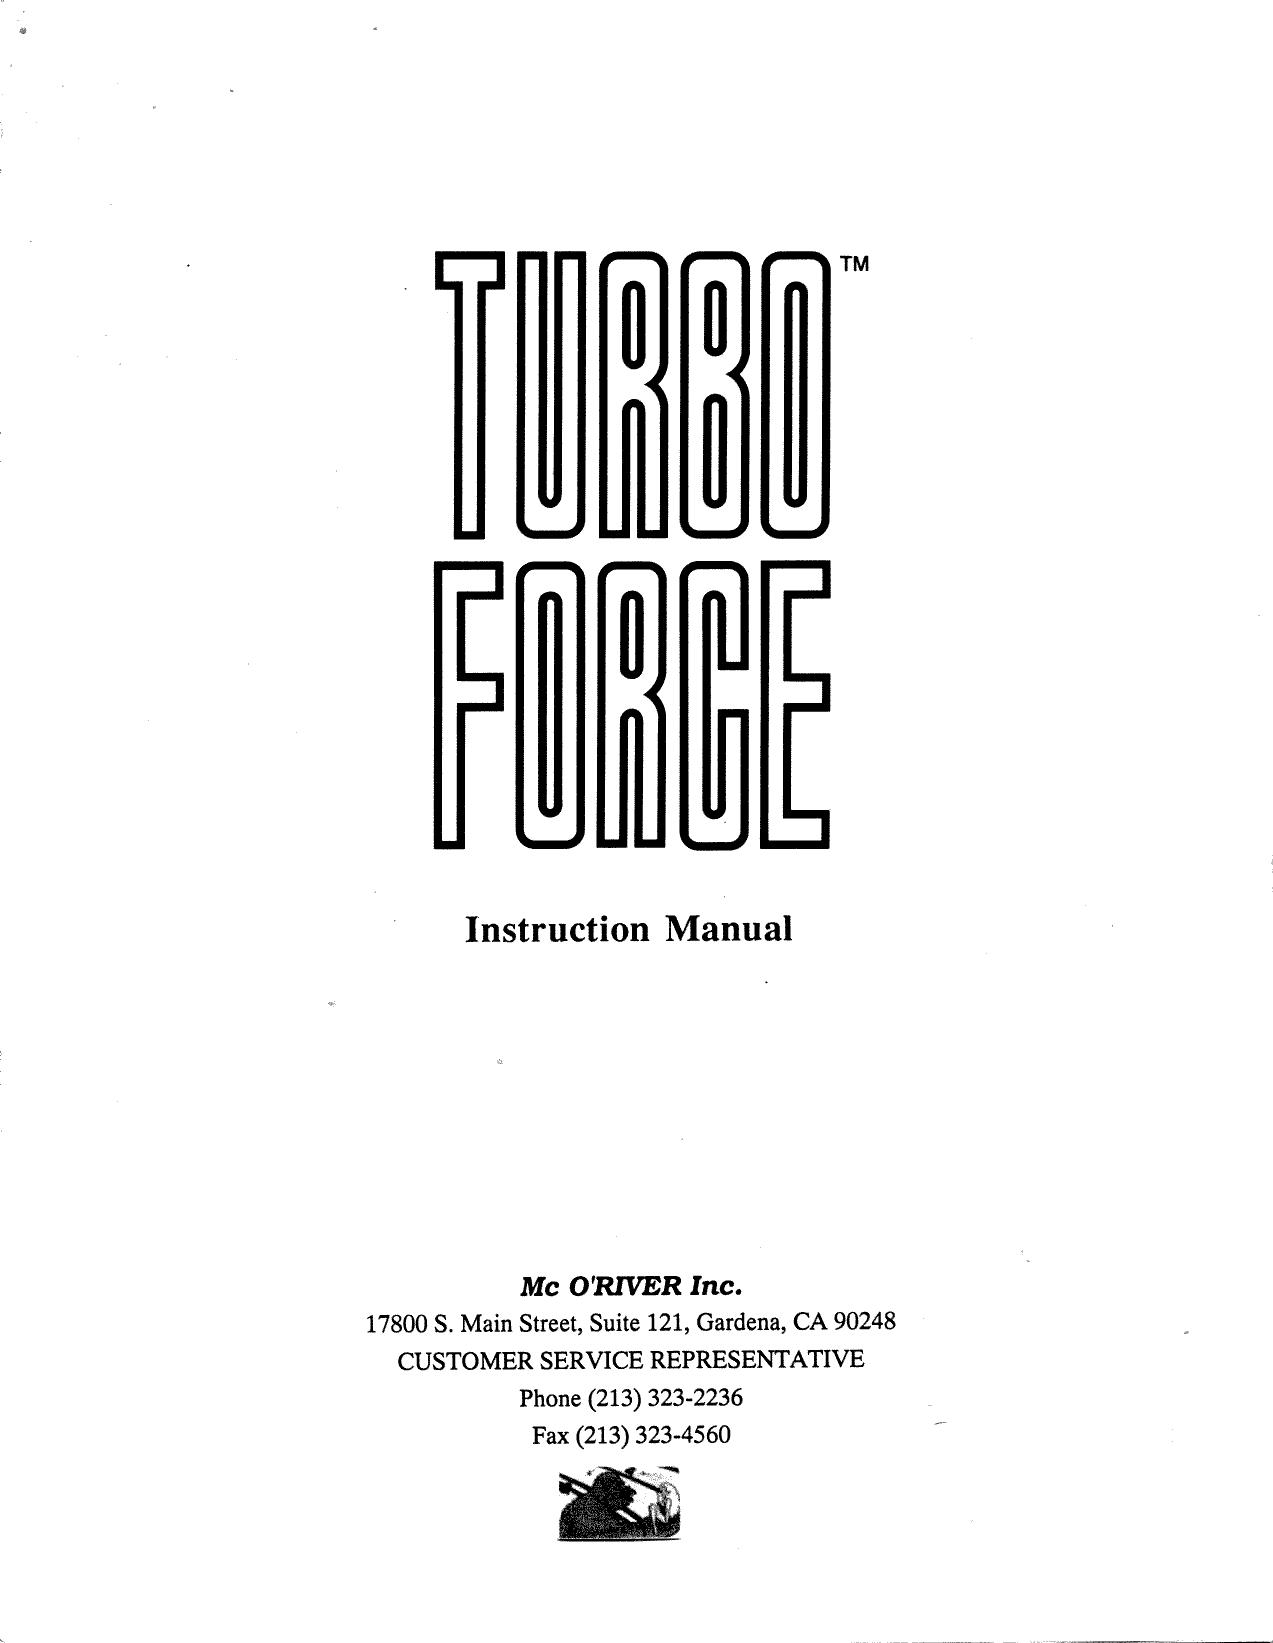 Turbo Force.man